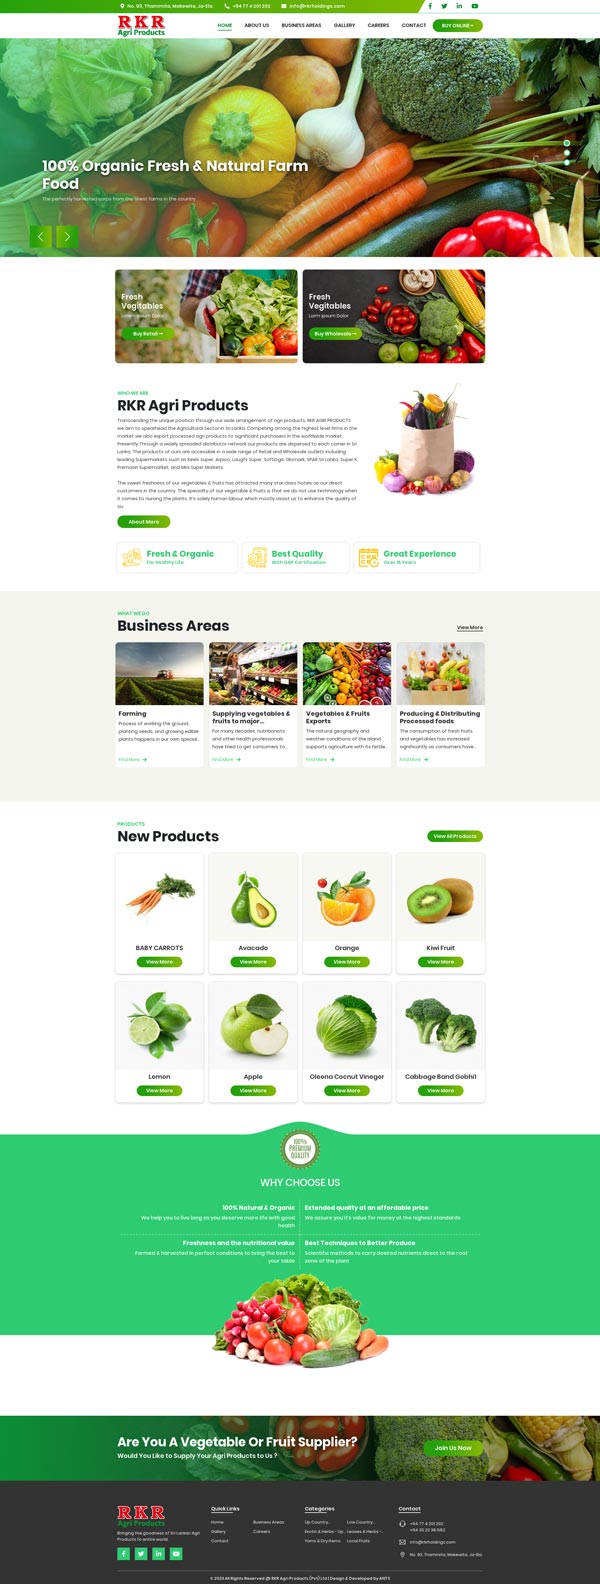 RKR Agri Products | Web Design Sri Lanka